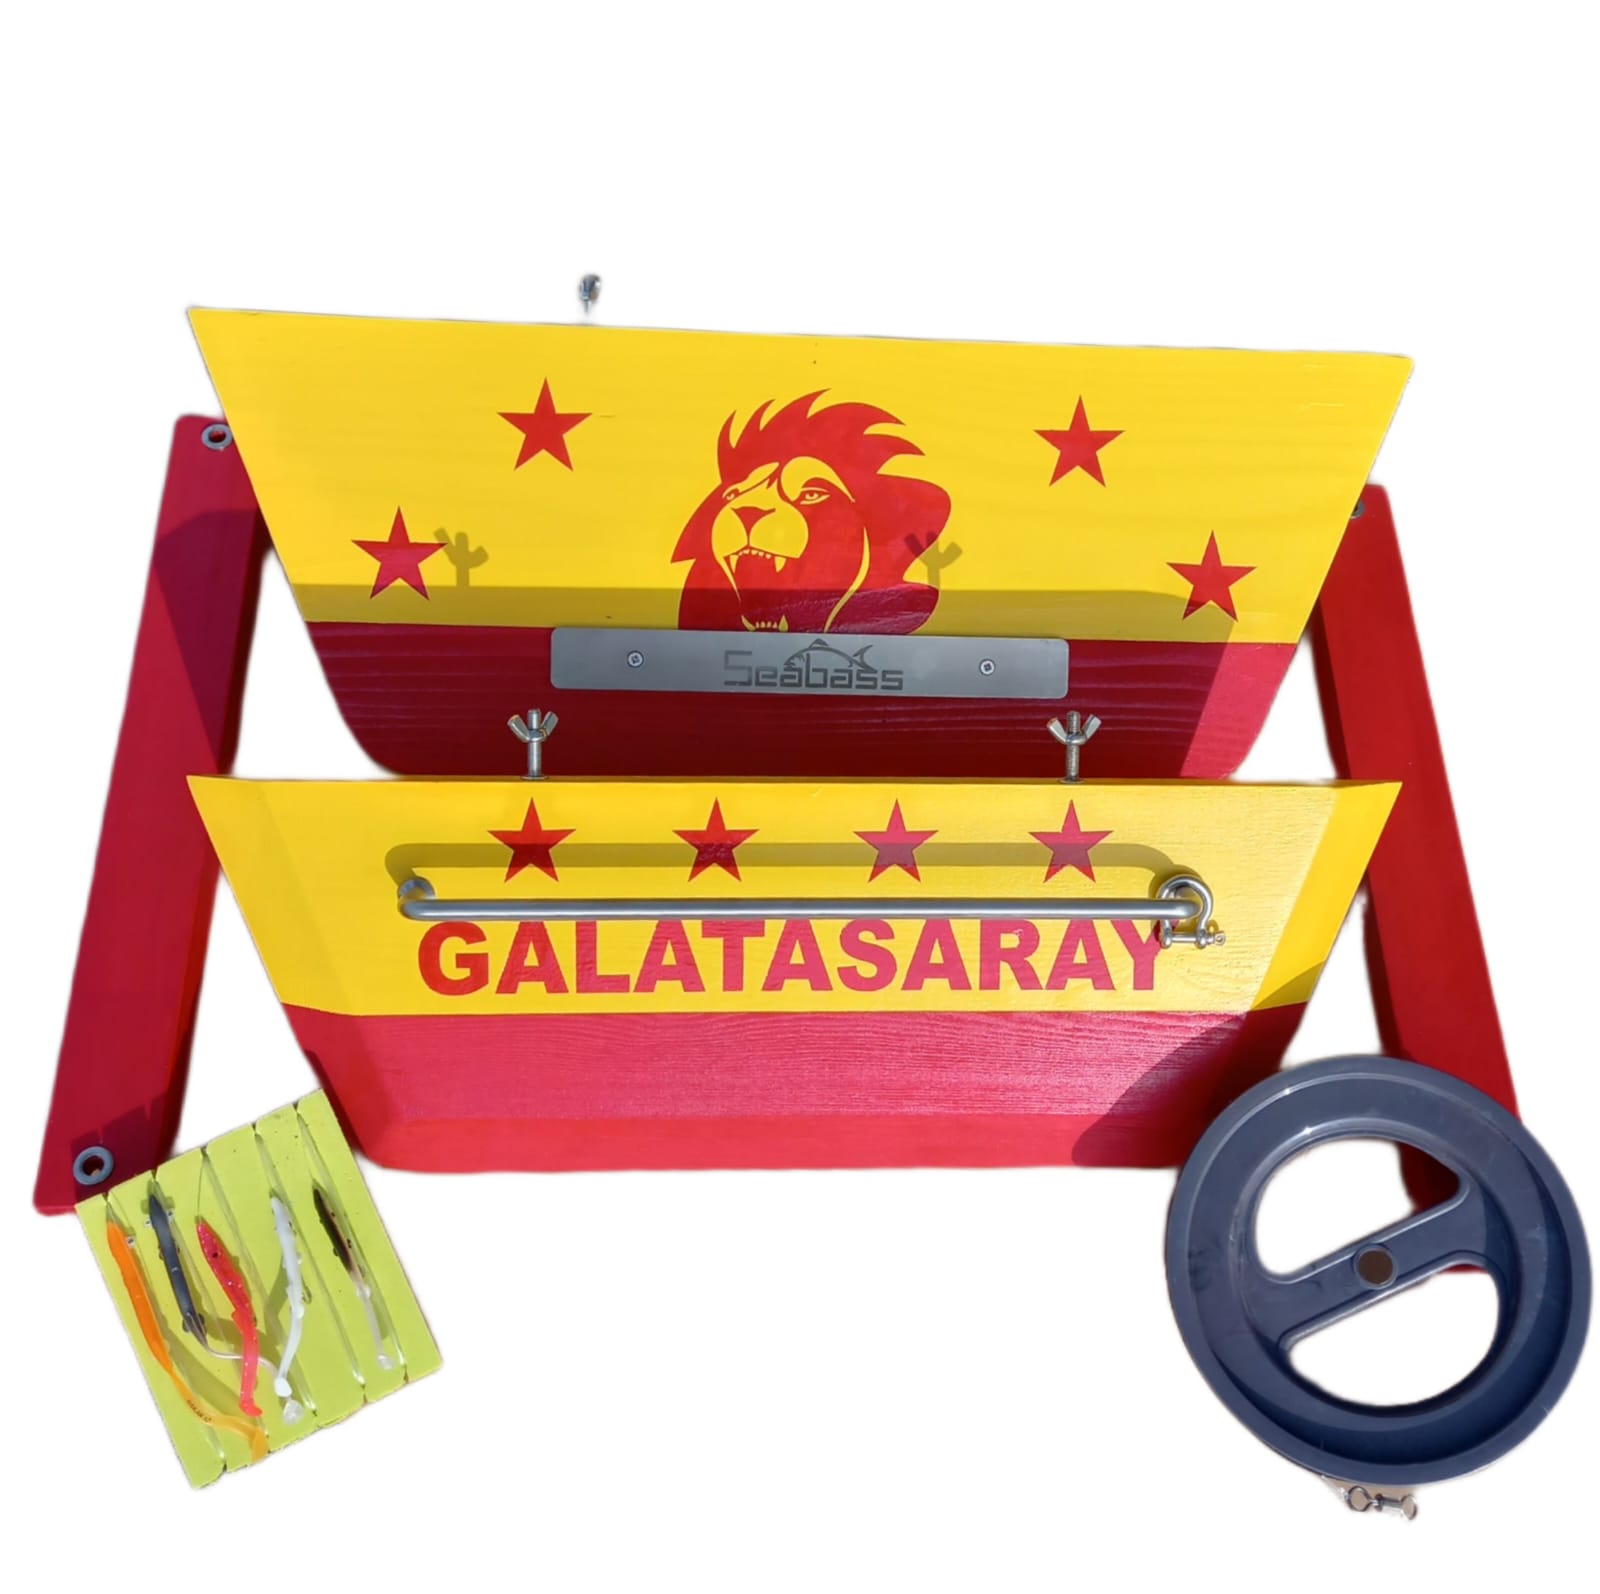 Prof Galatasaray